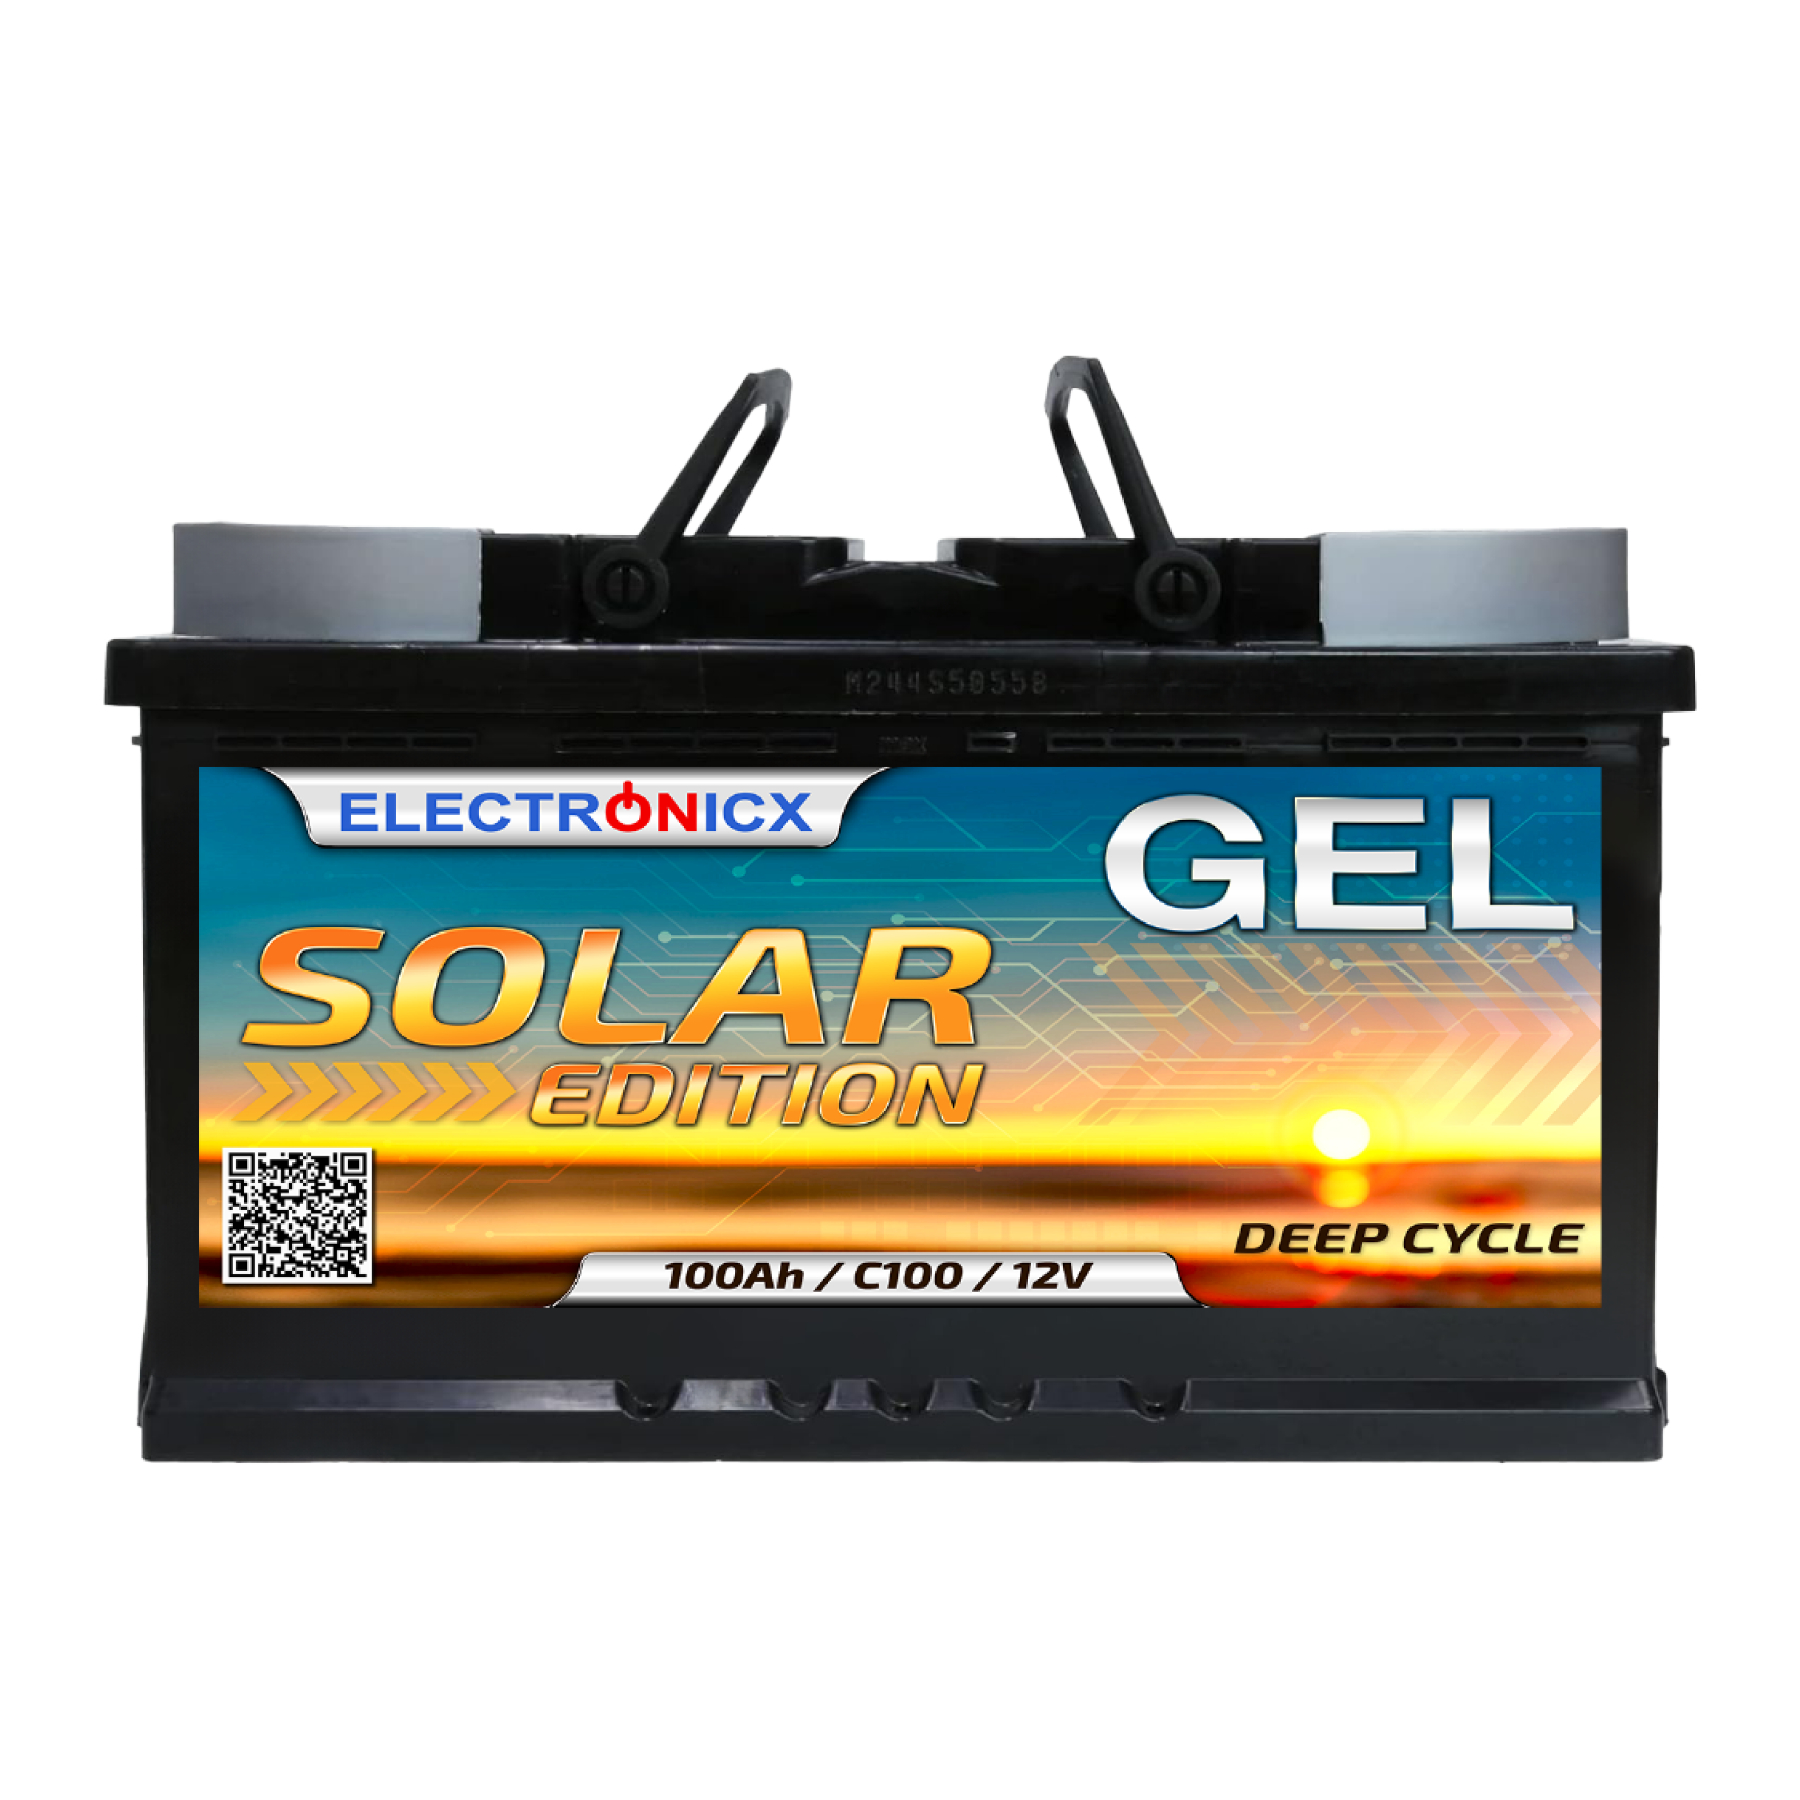 https://electronicx.de/media/image/product/8046/lg/electronicx-solar-edition-gel-batterie-100-ah-12v-solar-versorgung-solarbatterie~2.jpg